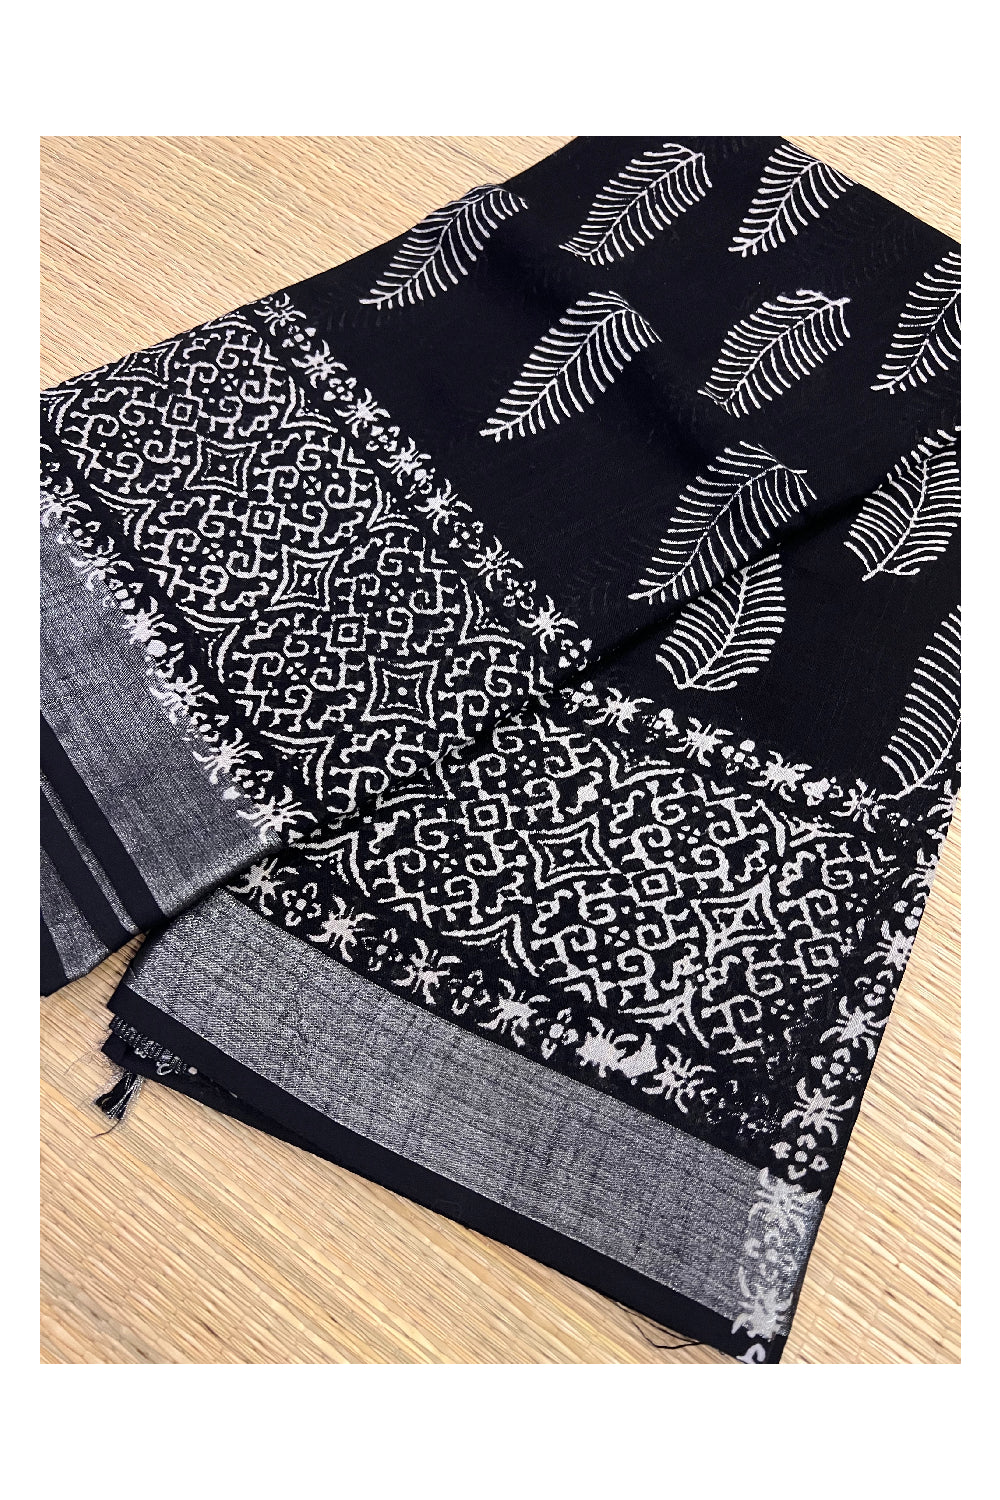 Southloom Linen Black and White Designer Saree